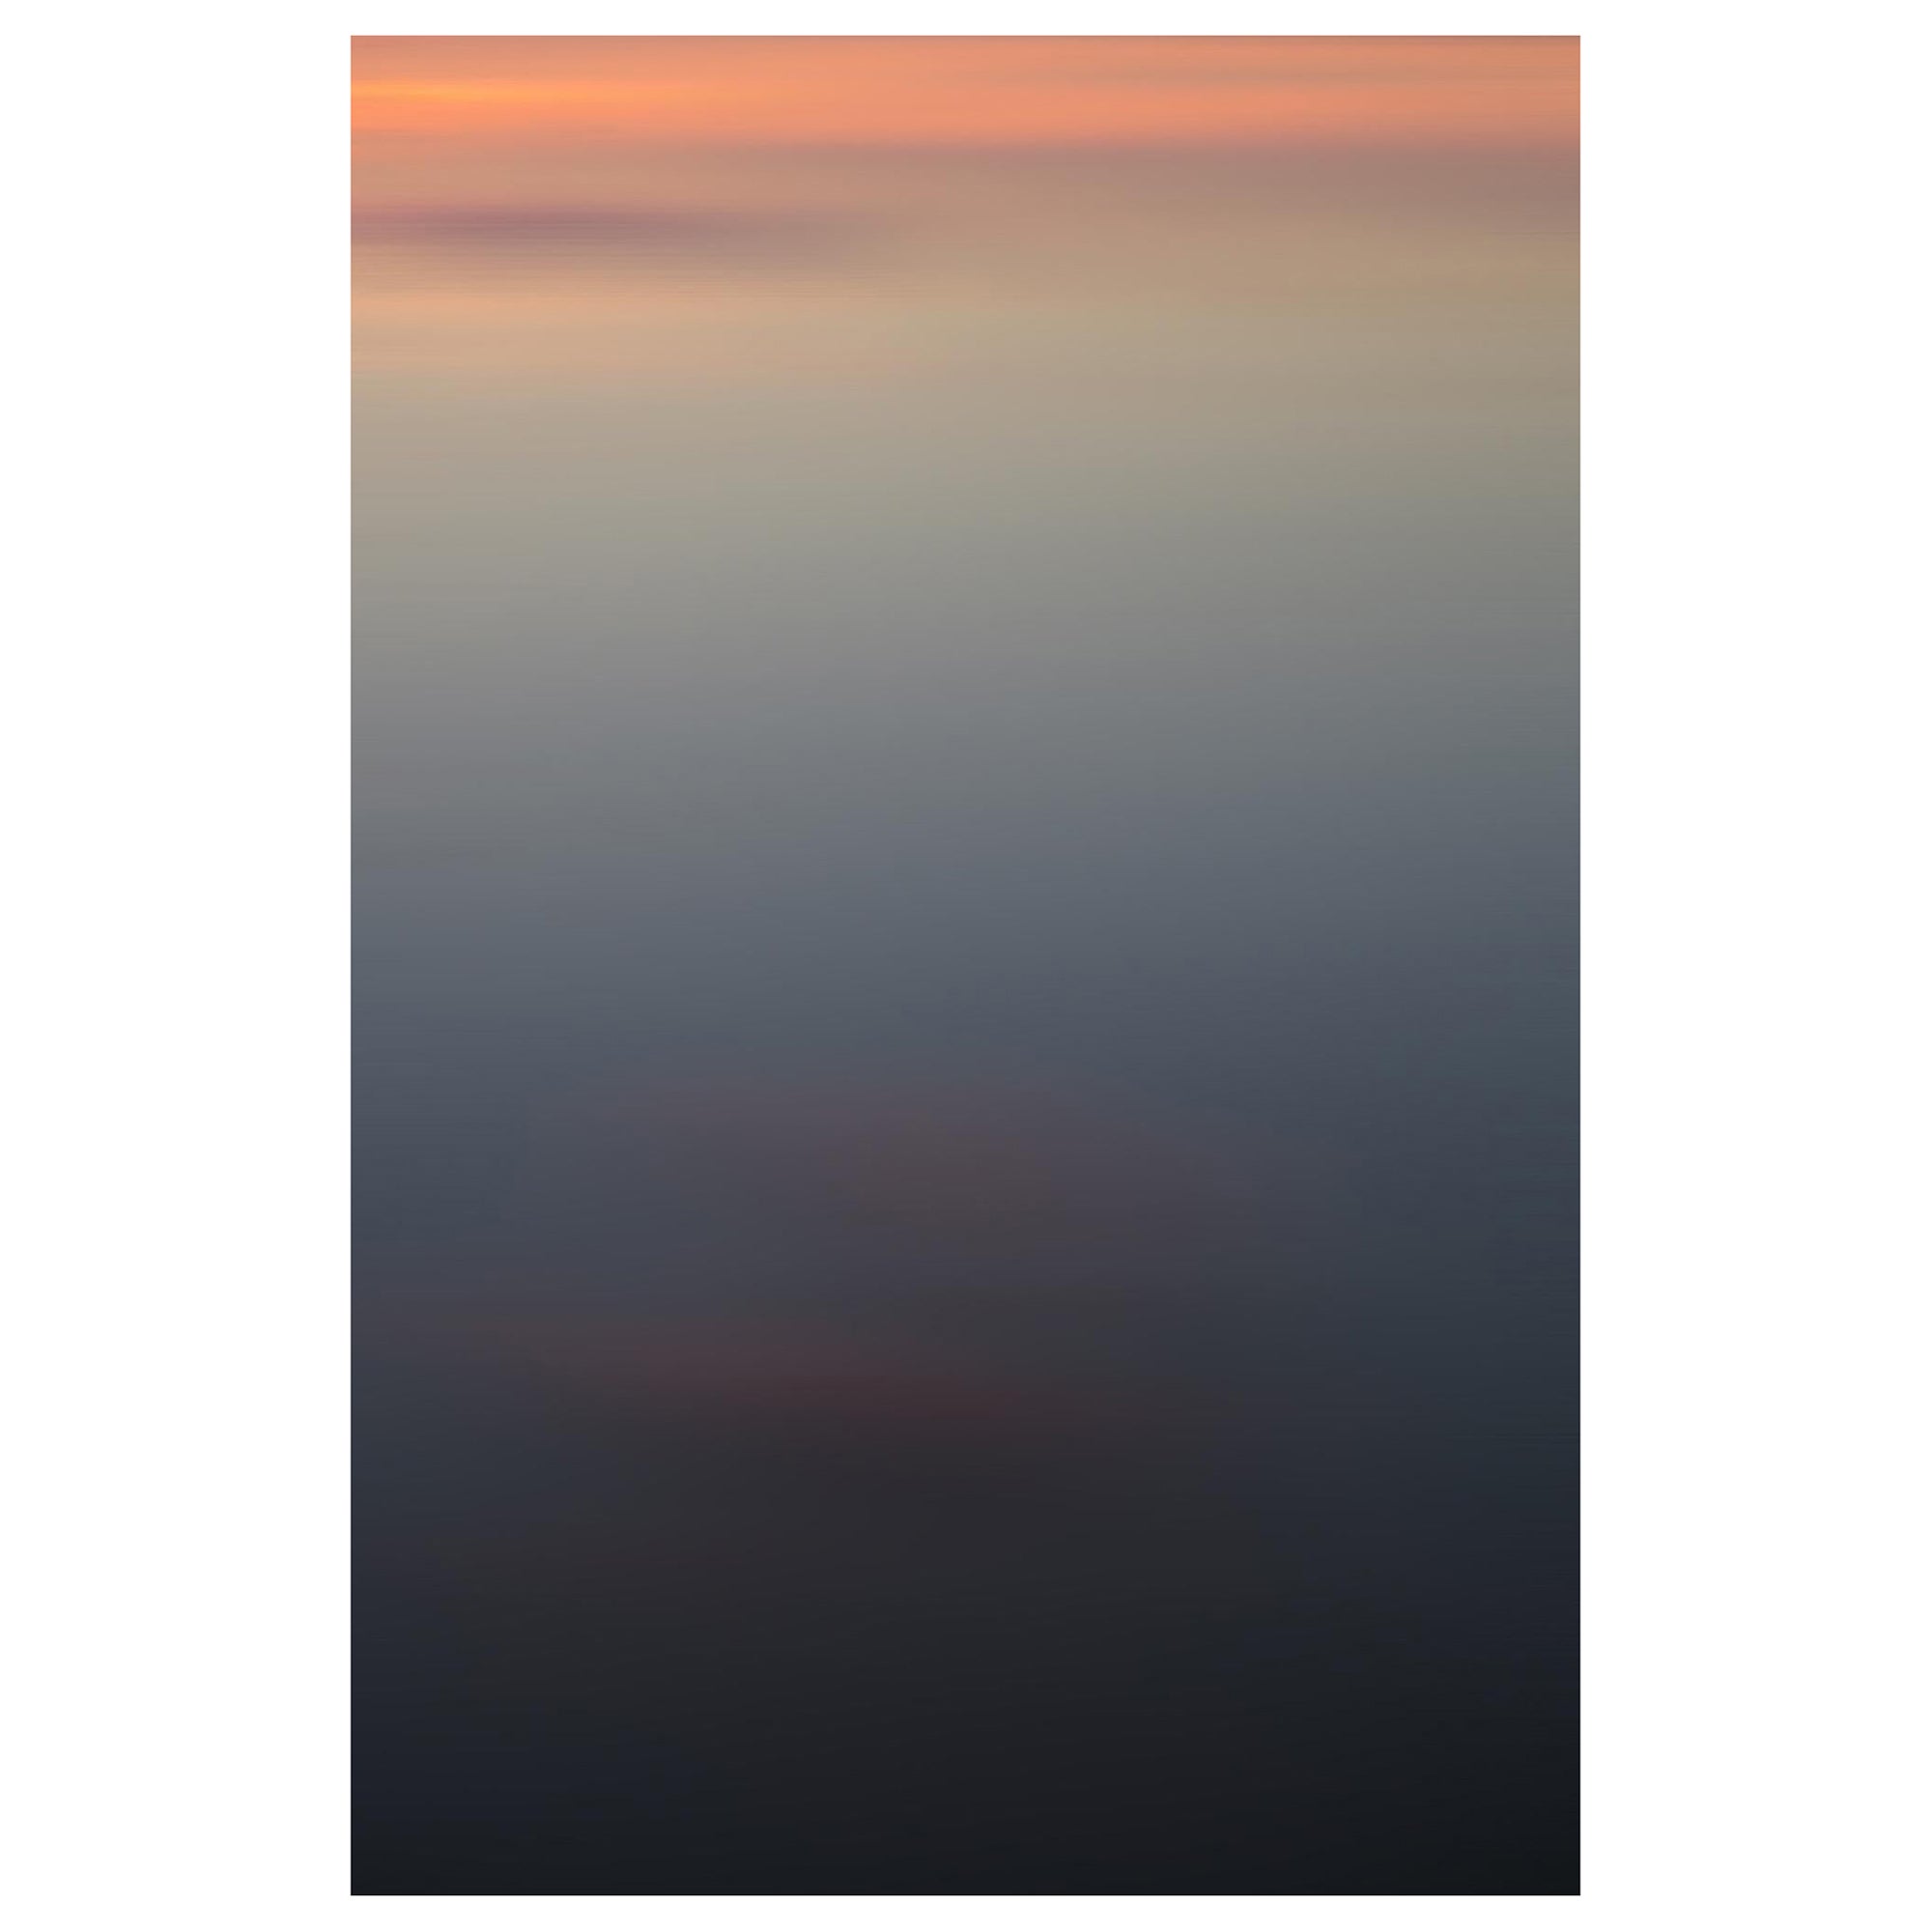 Bonnie Edelman "Pink Cloud Reflection, Germany" Photograph, Scapes Series, 2017